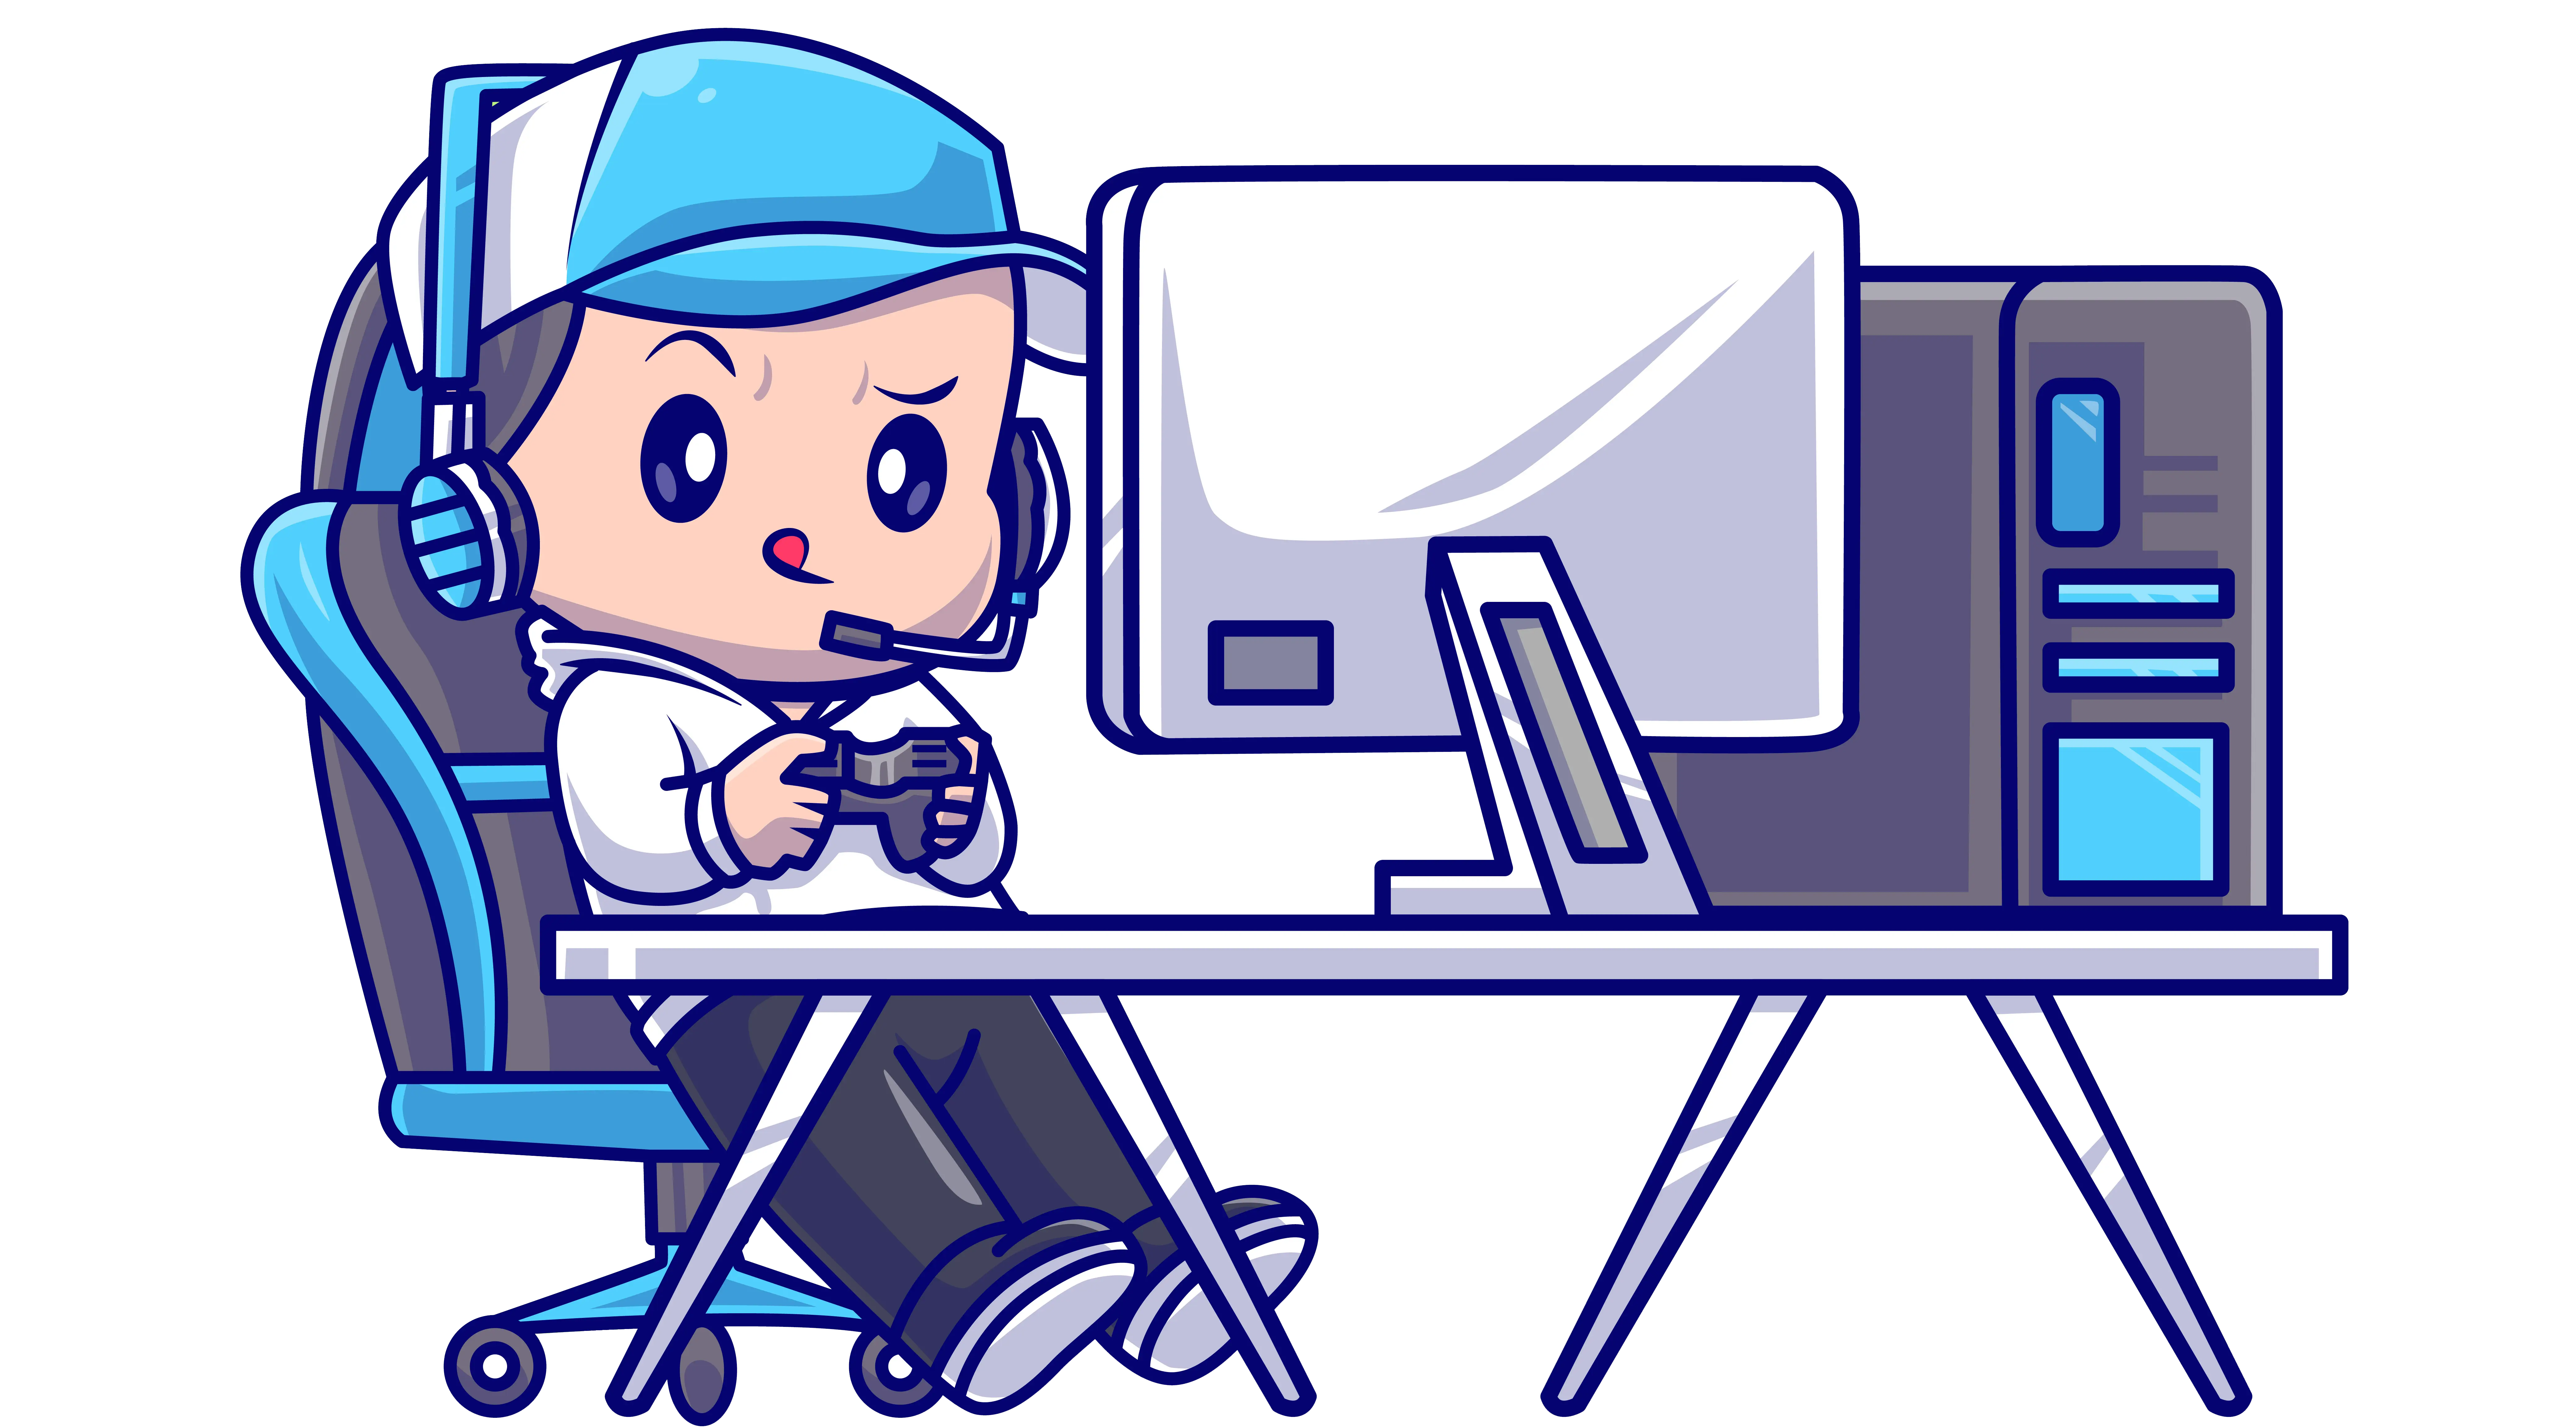 ilustracao menino jogando video game no computador